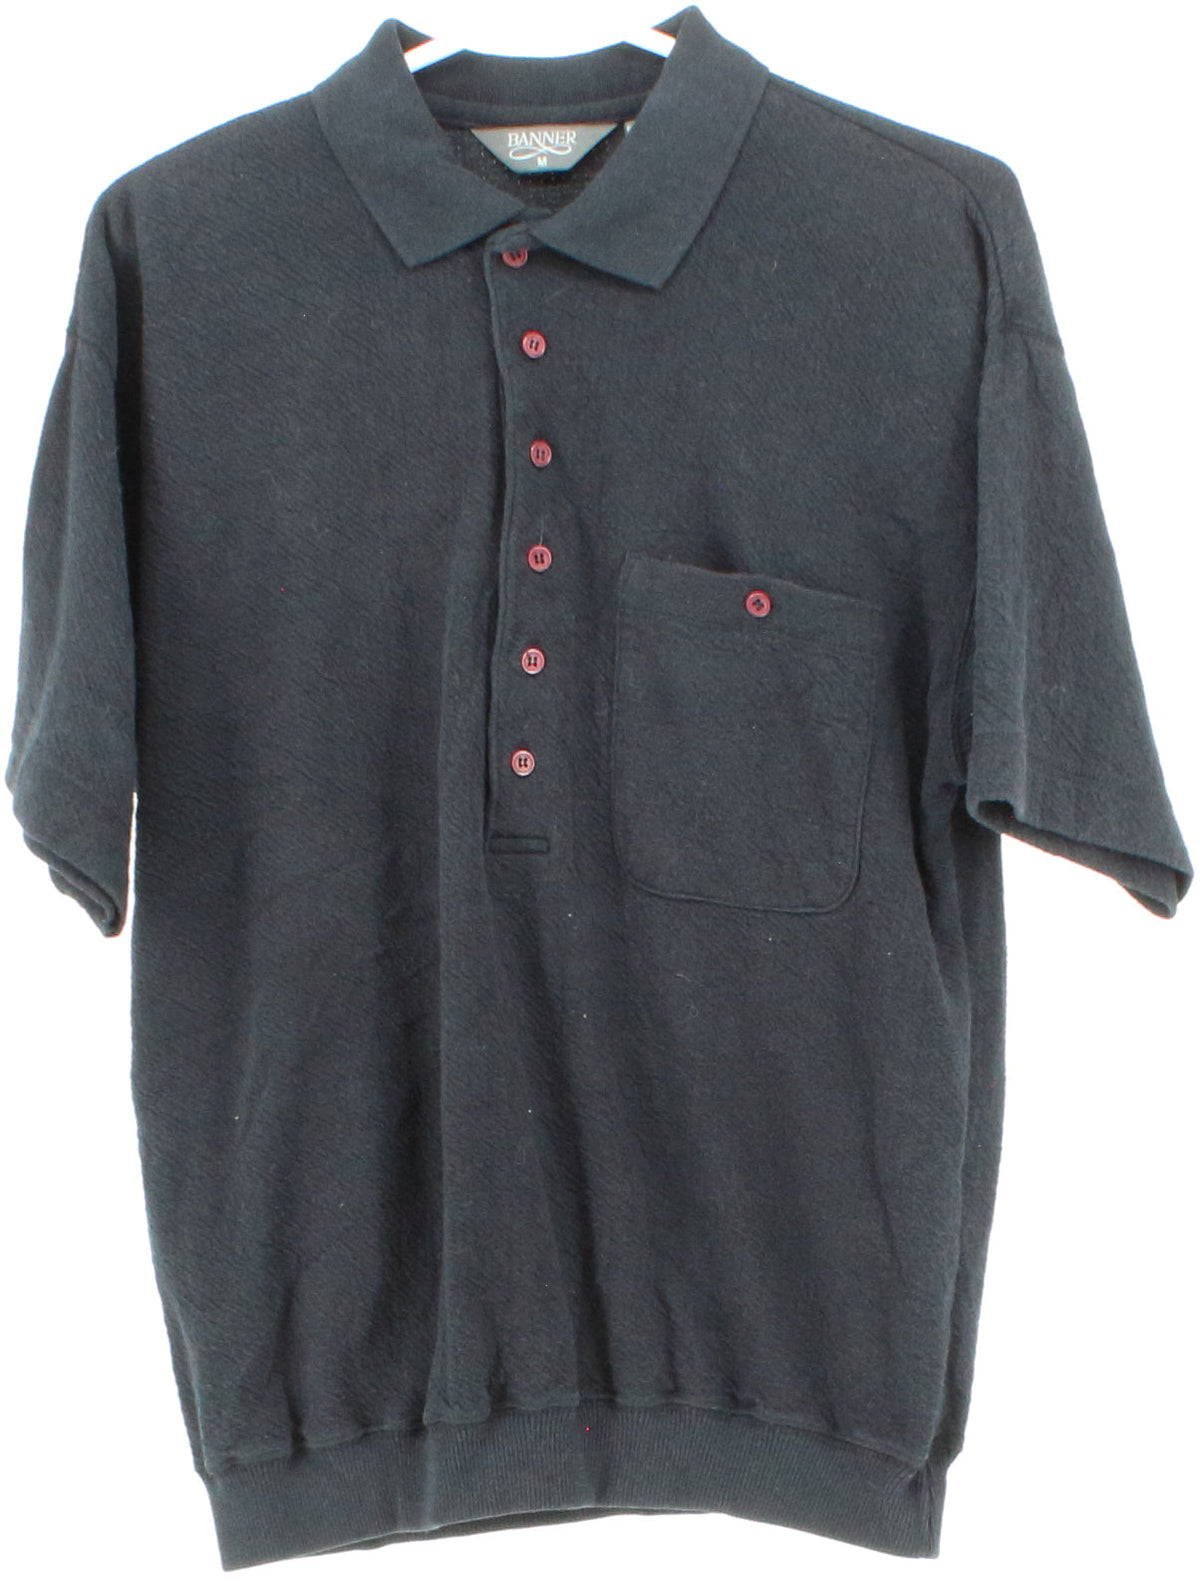 Banner Black Short Sleeve Golf Shirt